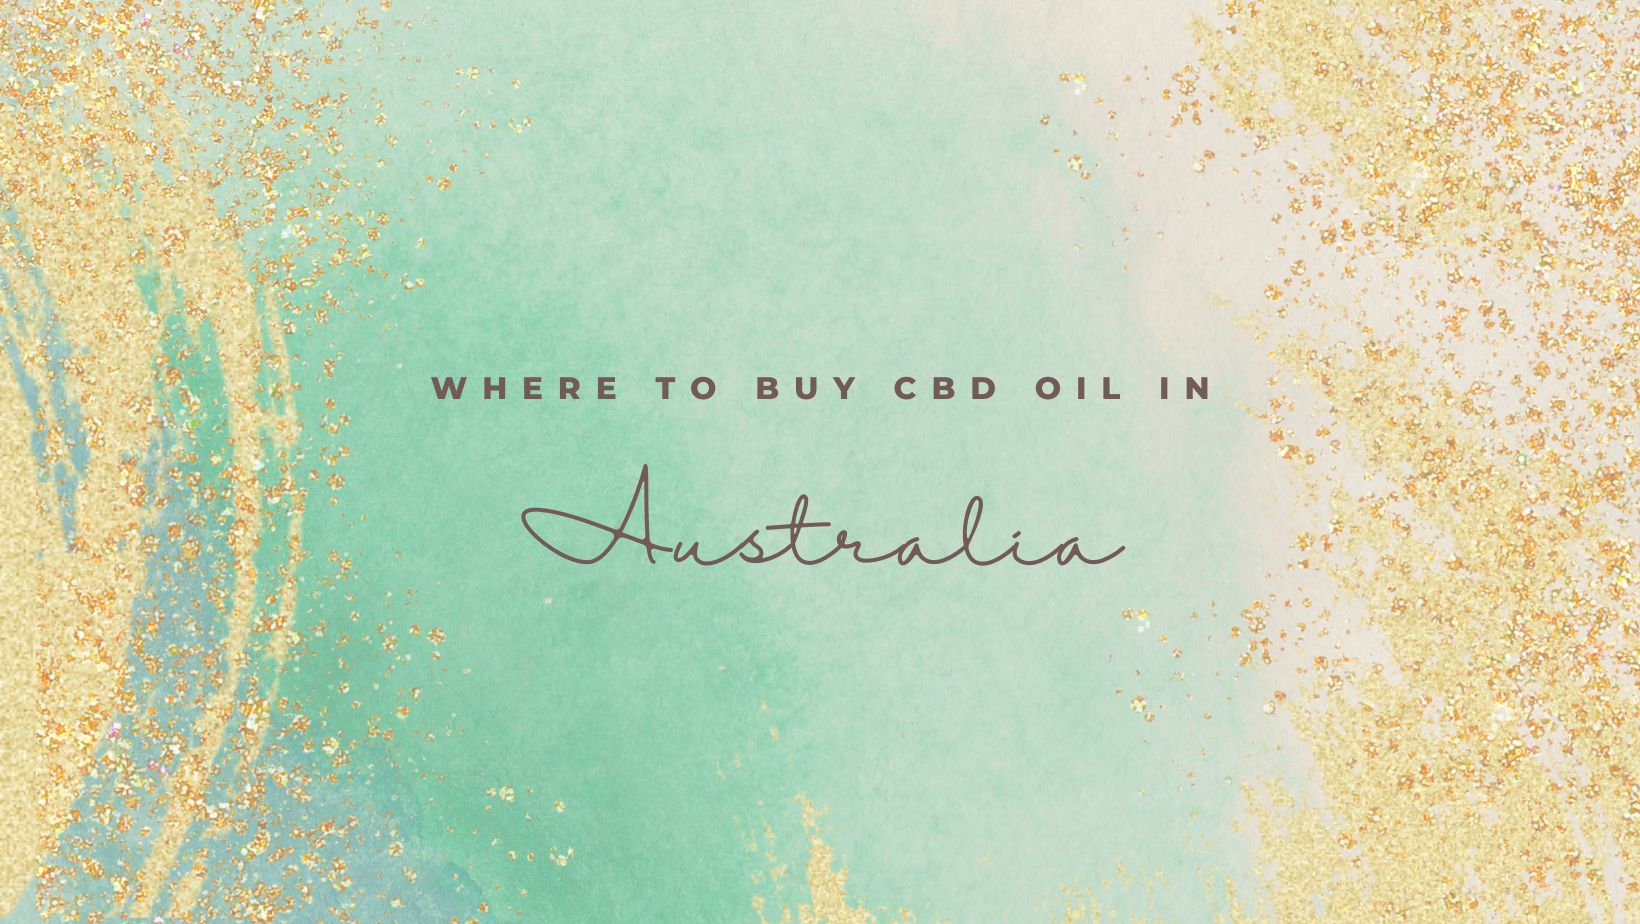 where to buy CBD oil in australia header image